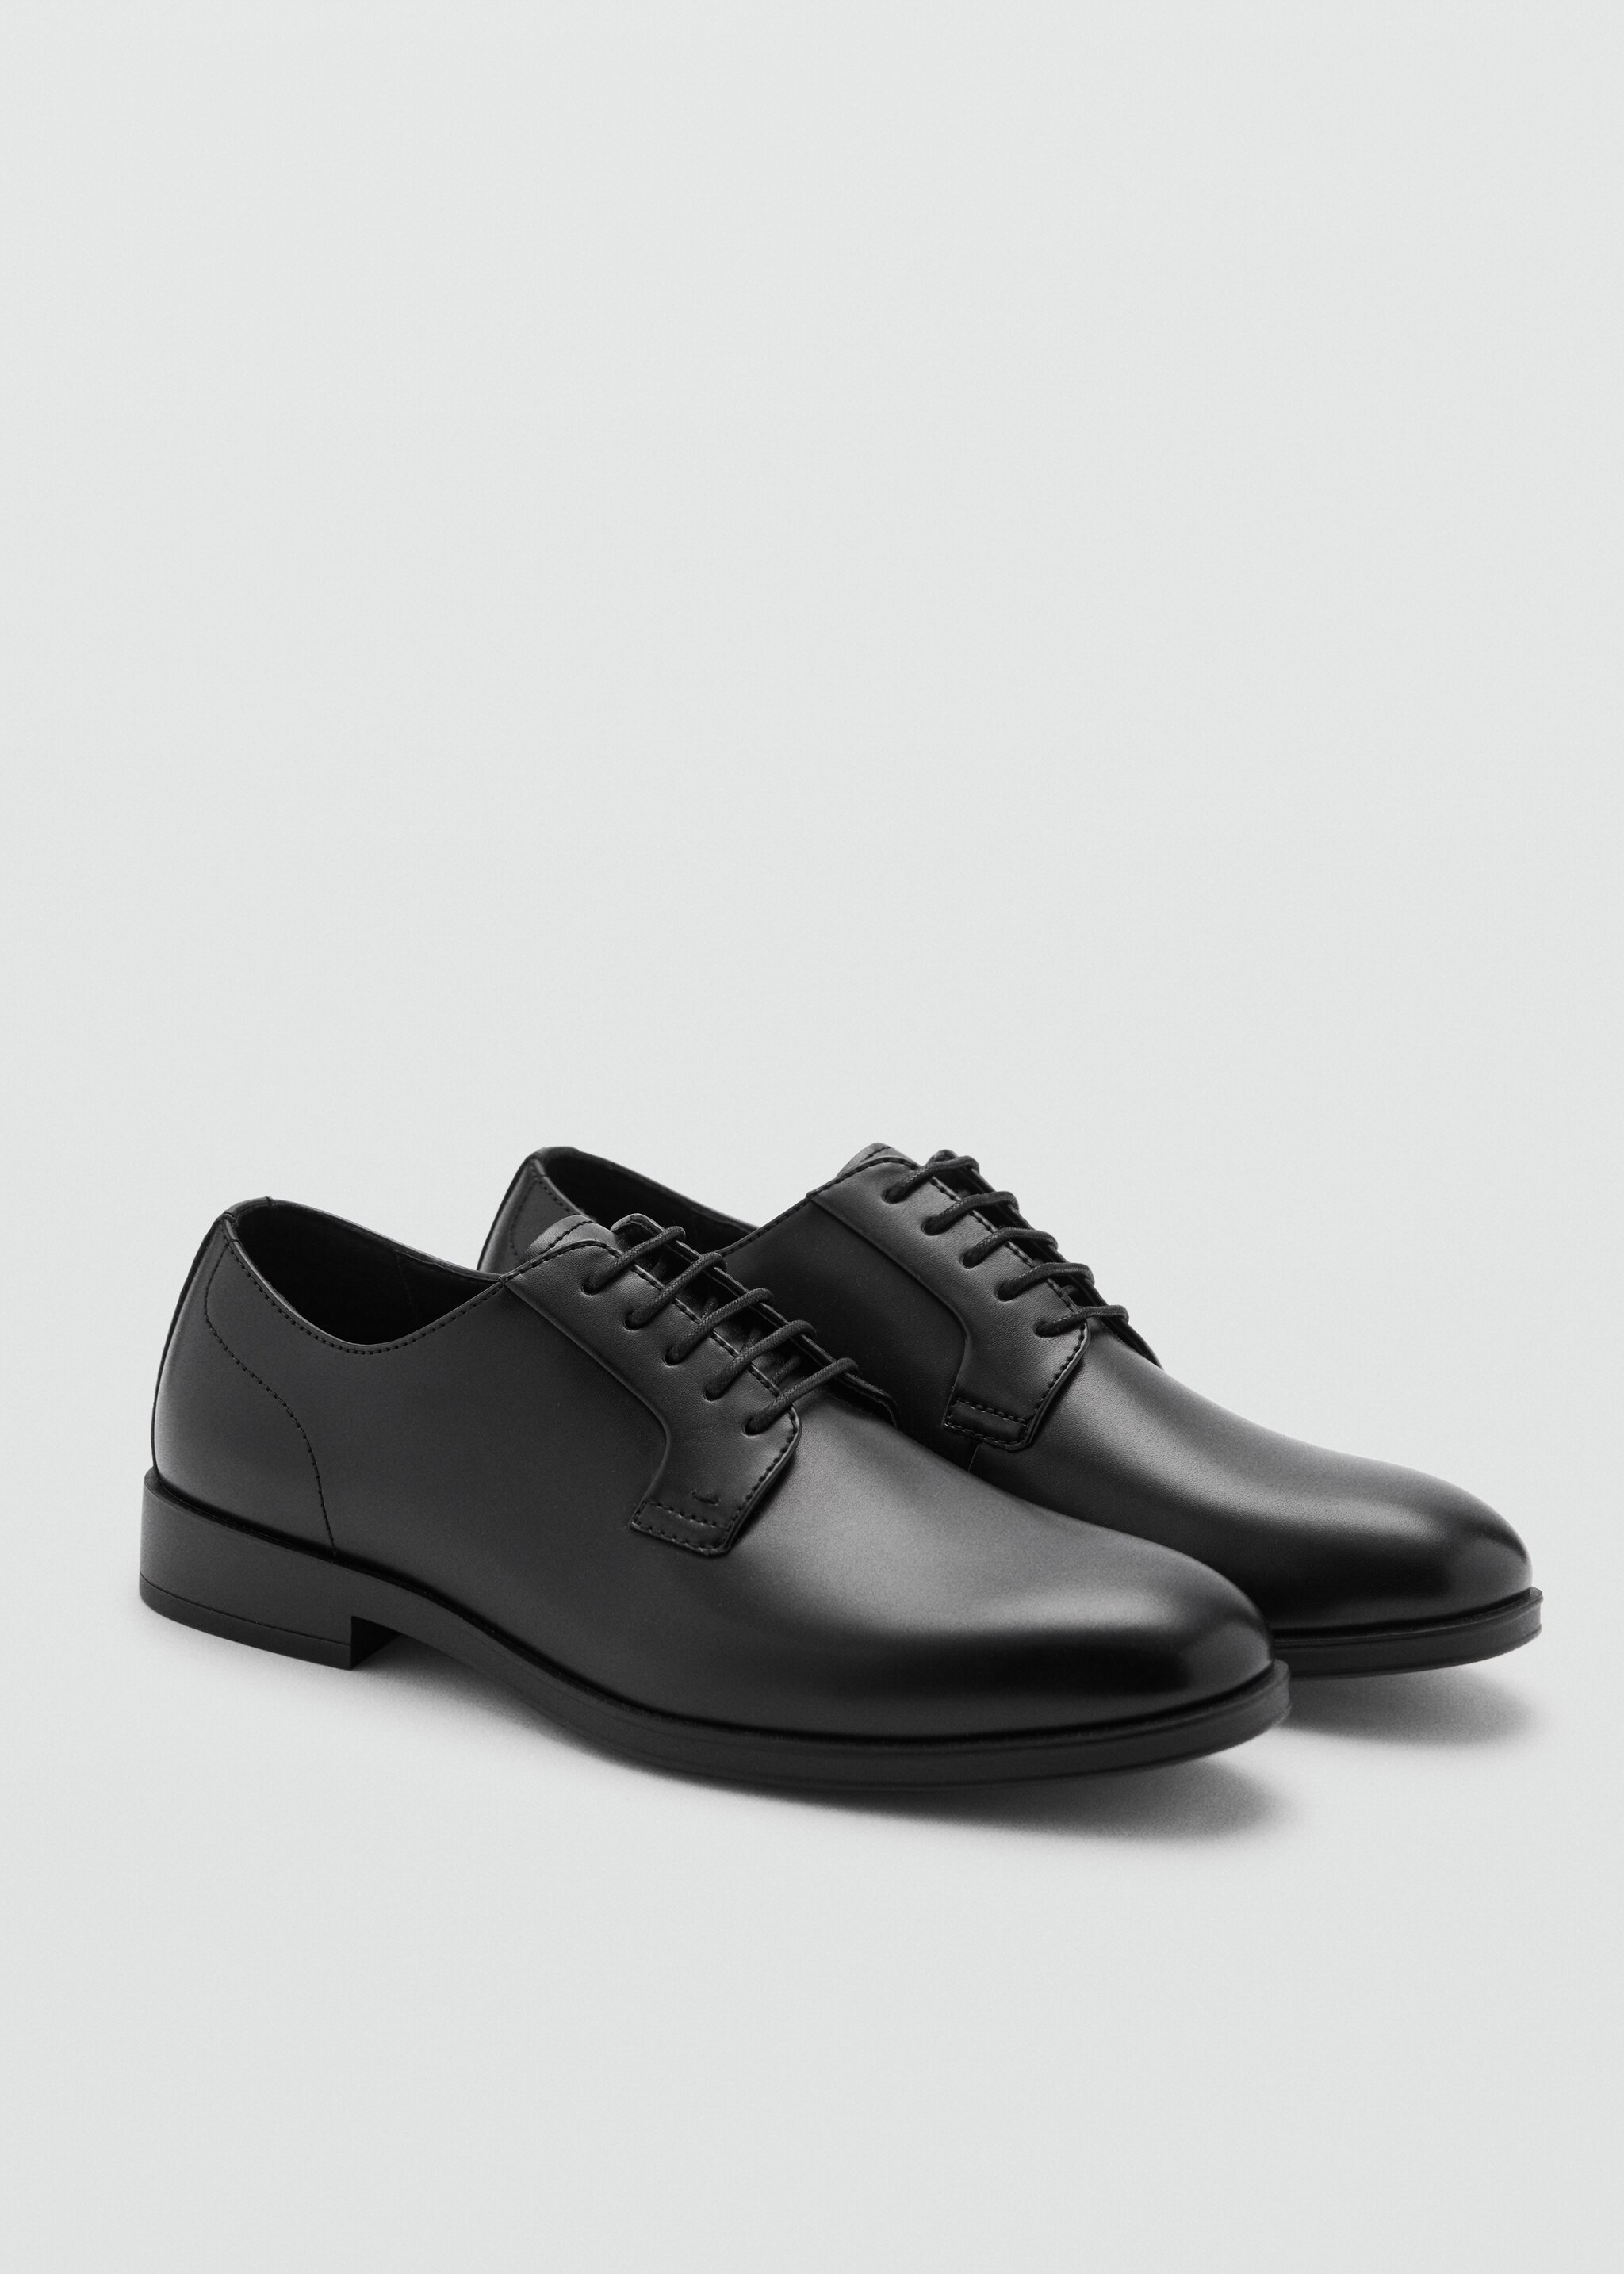  Leather effect suit shoe - Medium plane